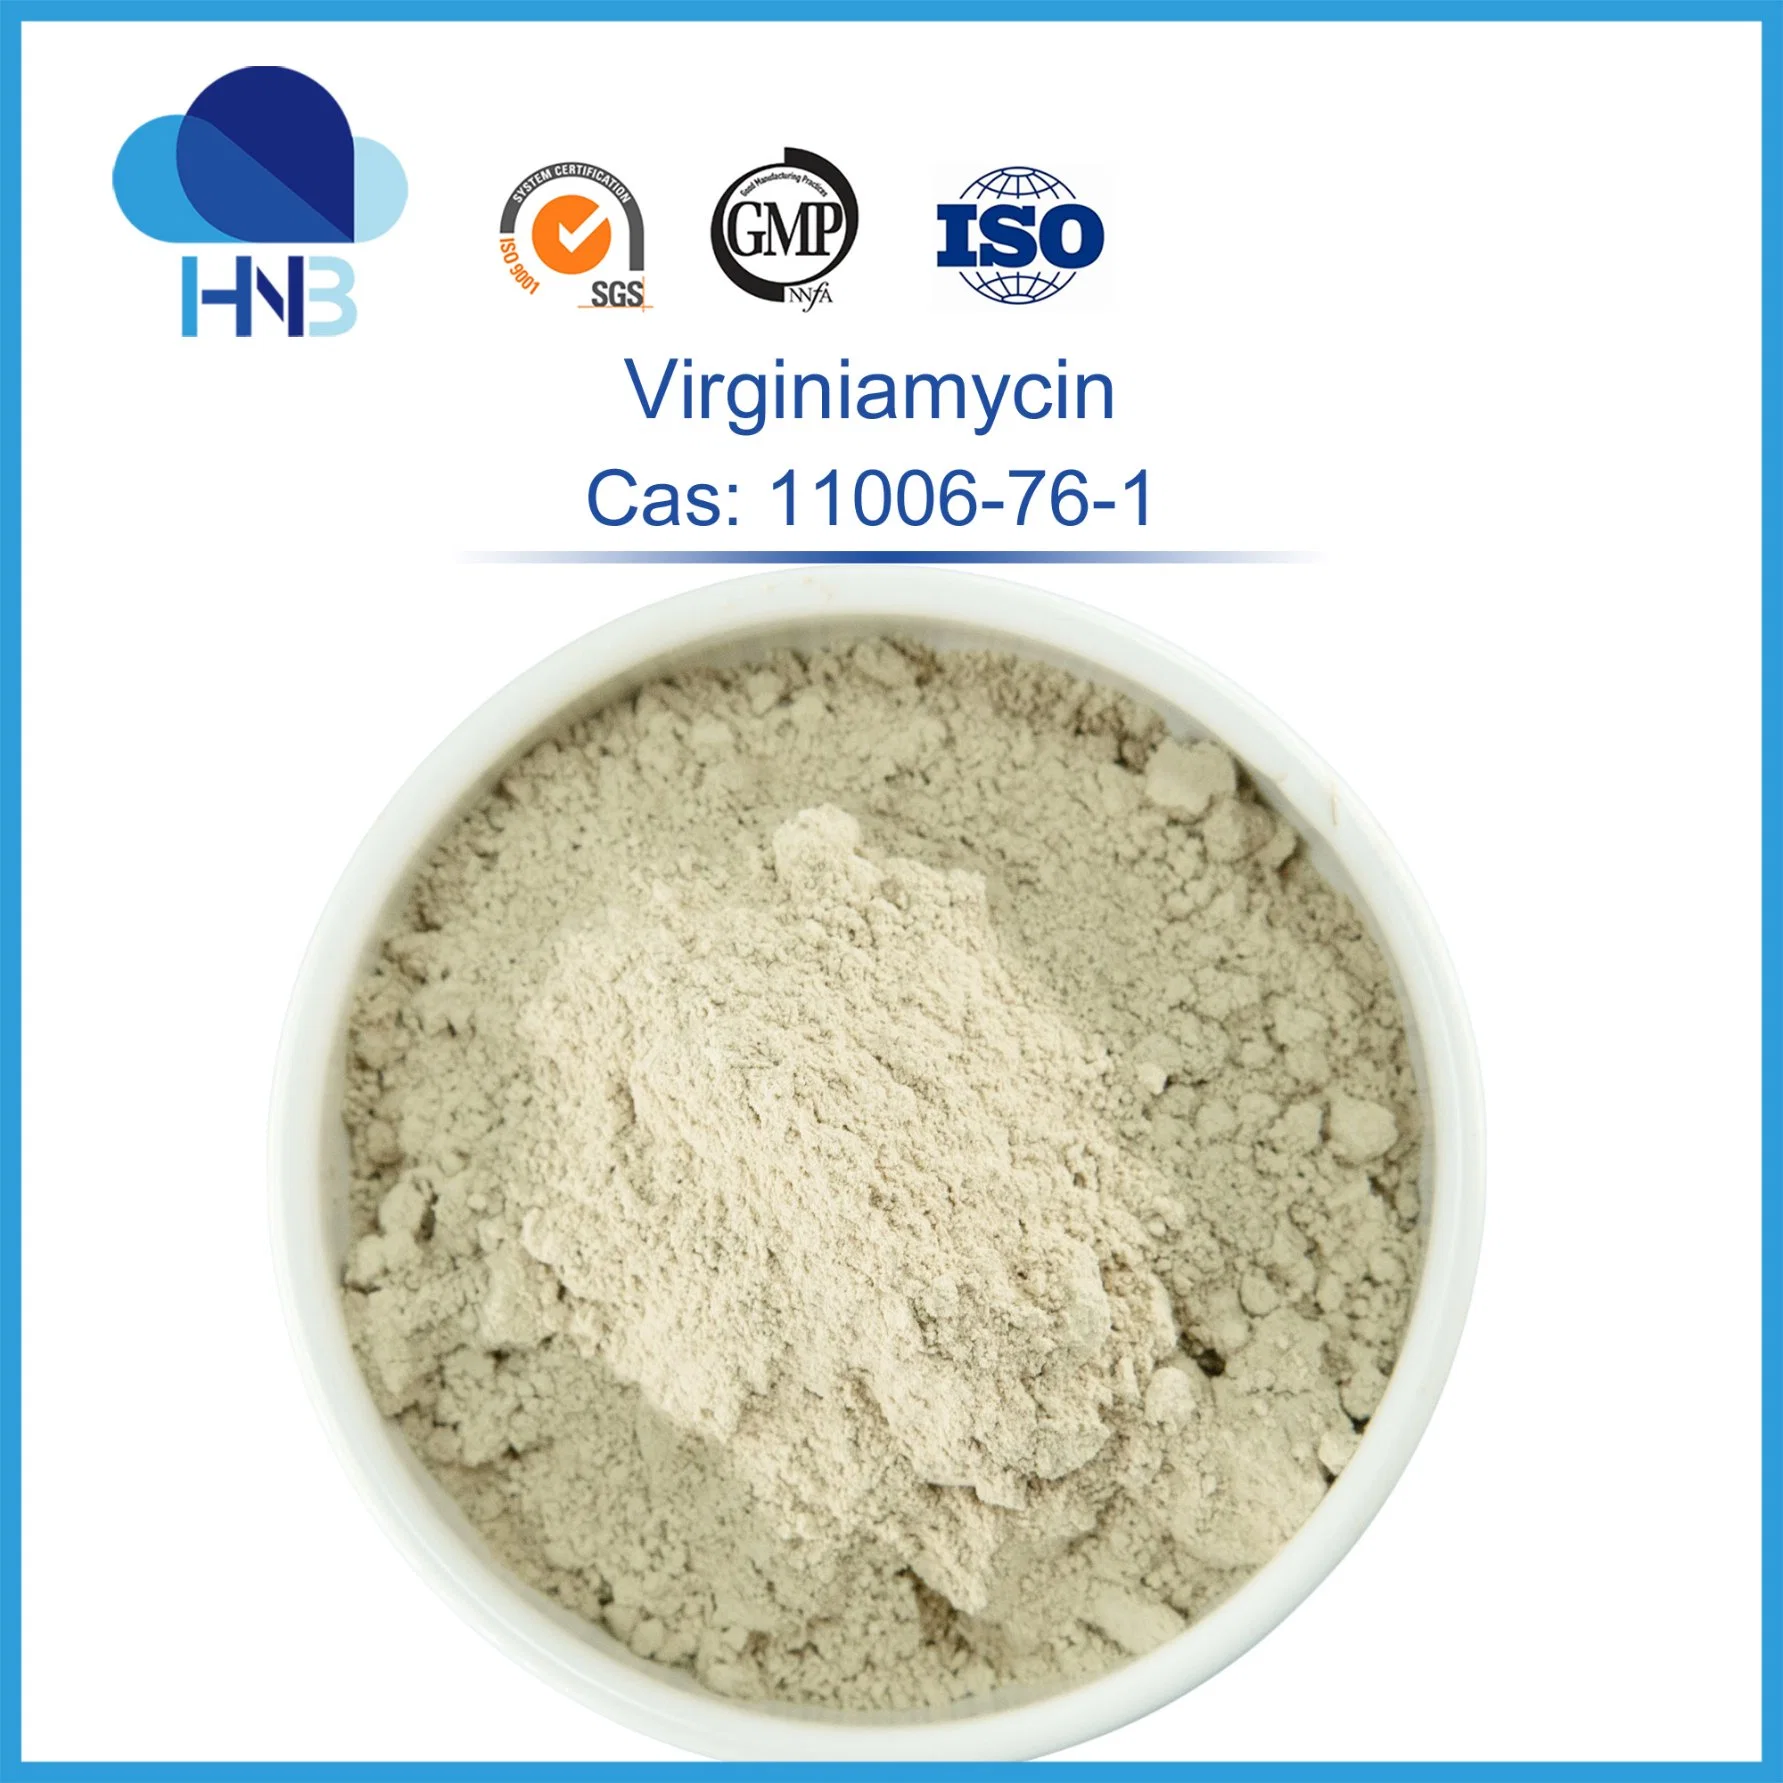 Veterinary CAS 11006-76-1 Virginiamycin Premix Benzylpcnicillin Penicillin